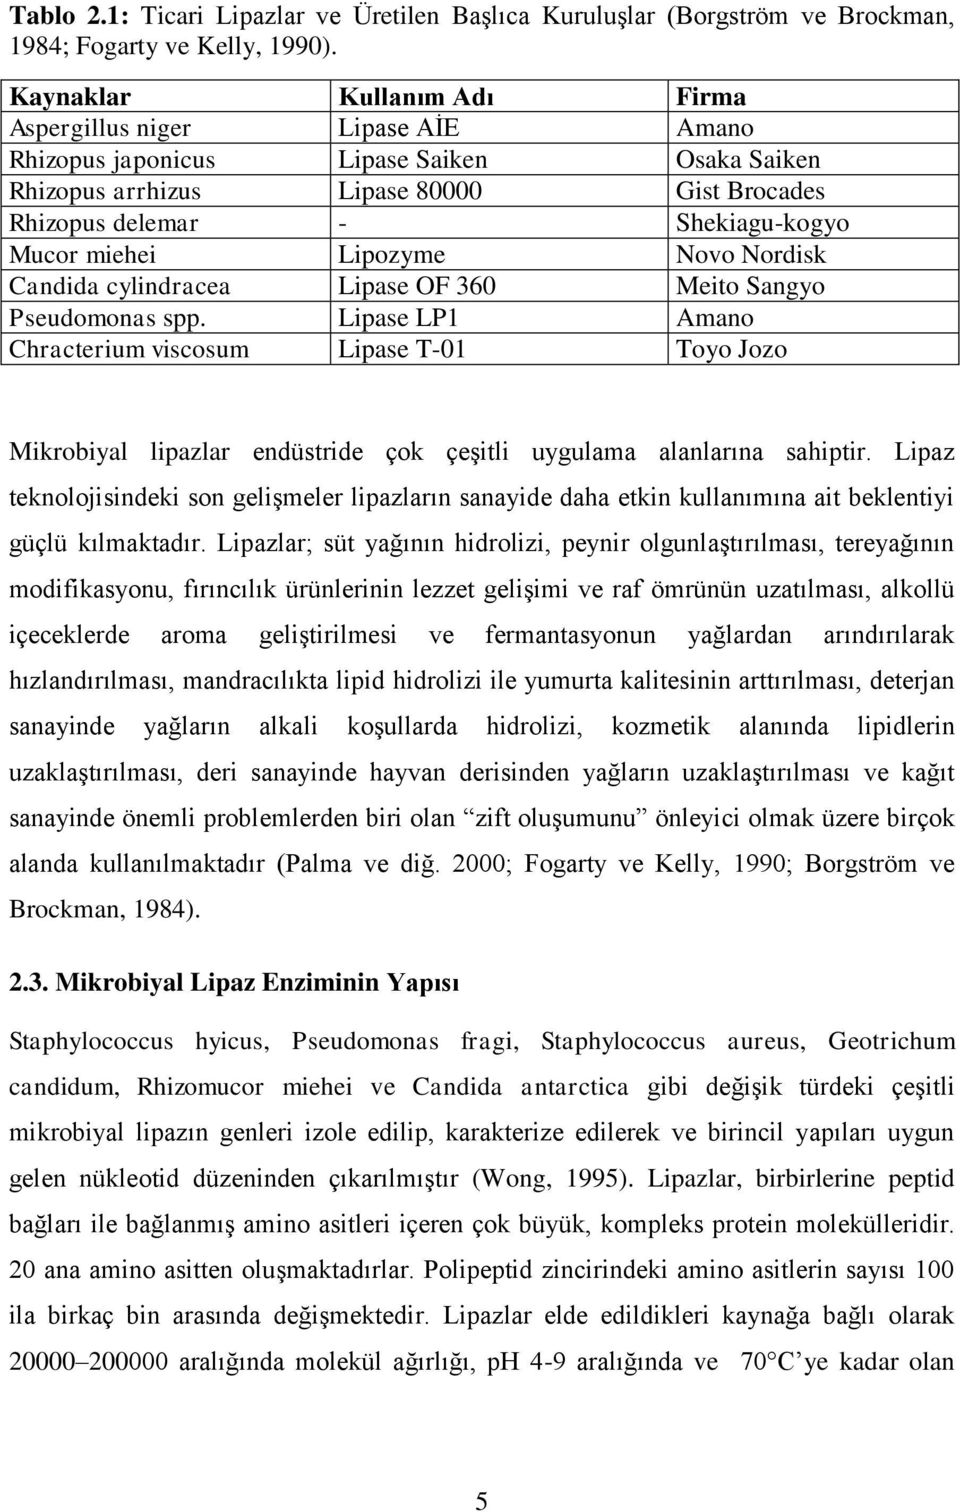 miehei Lipozyme Novo Nordisk Candida cylindracea Lipase OF 360 Meito Sangyo Pseudomonas spp.